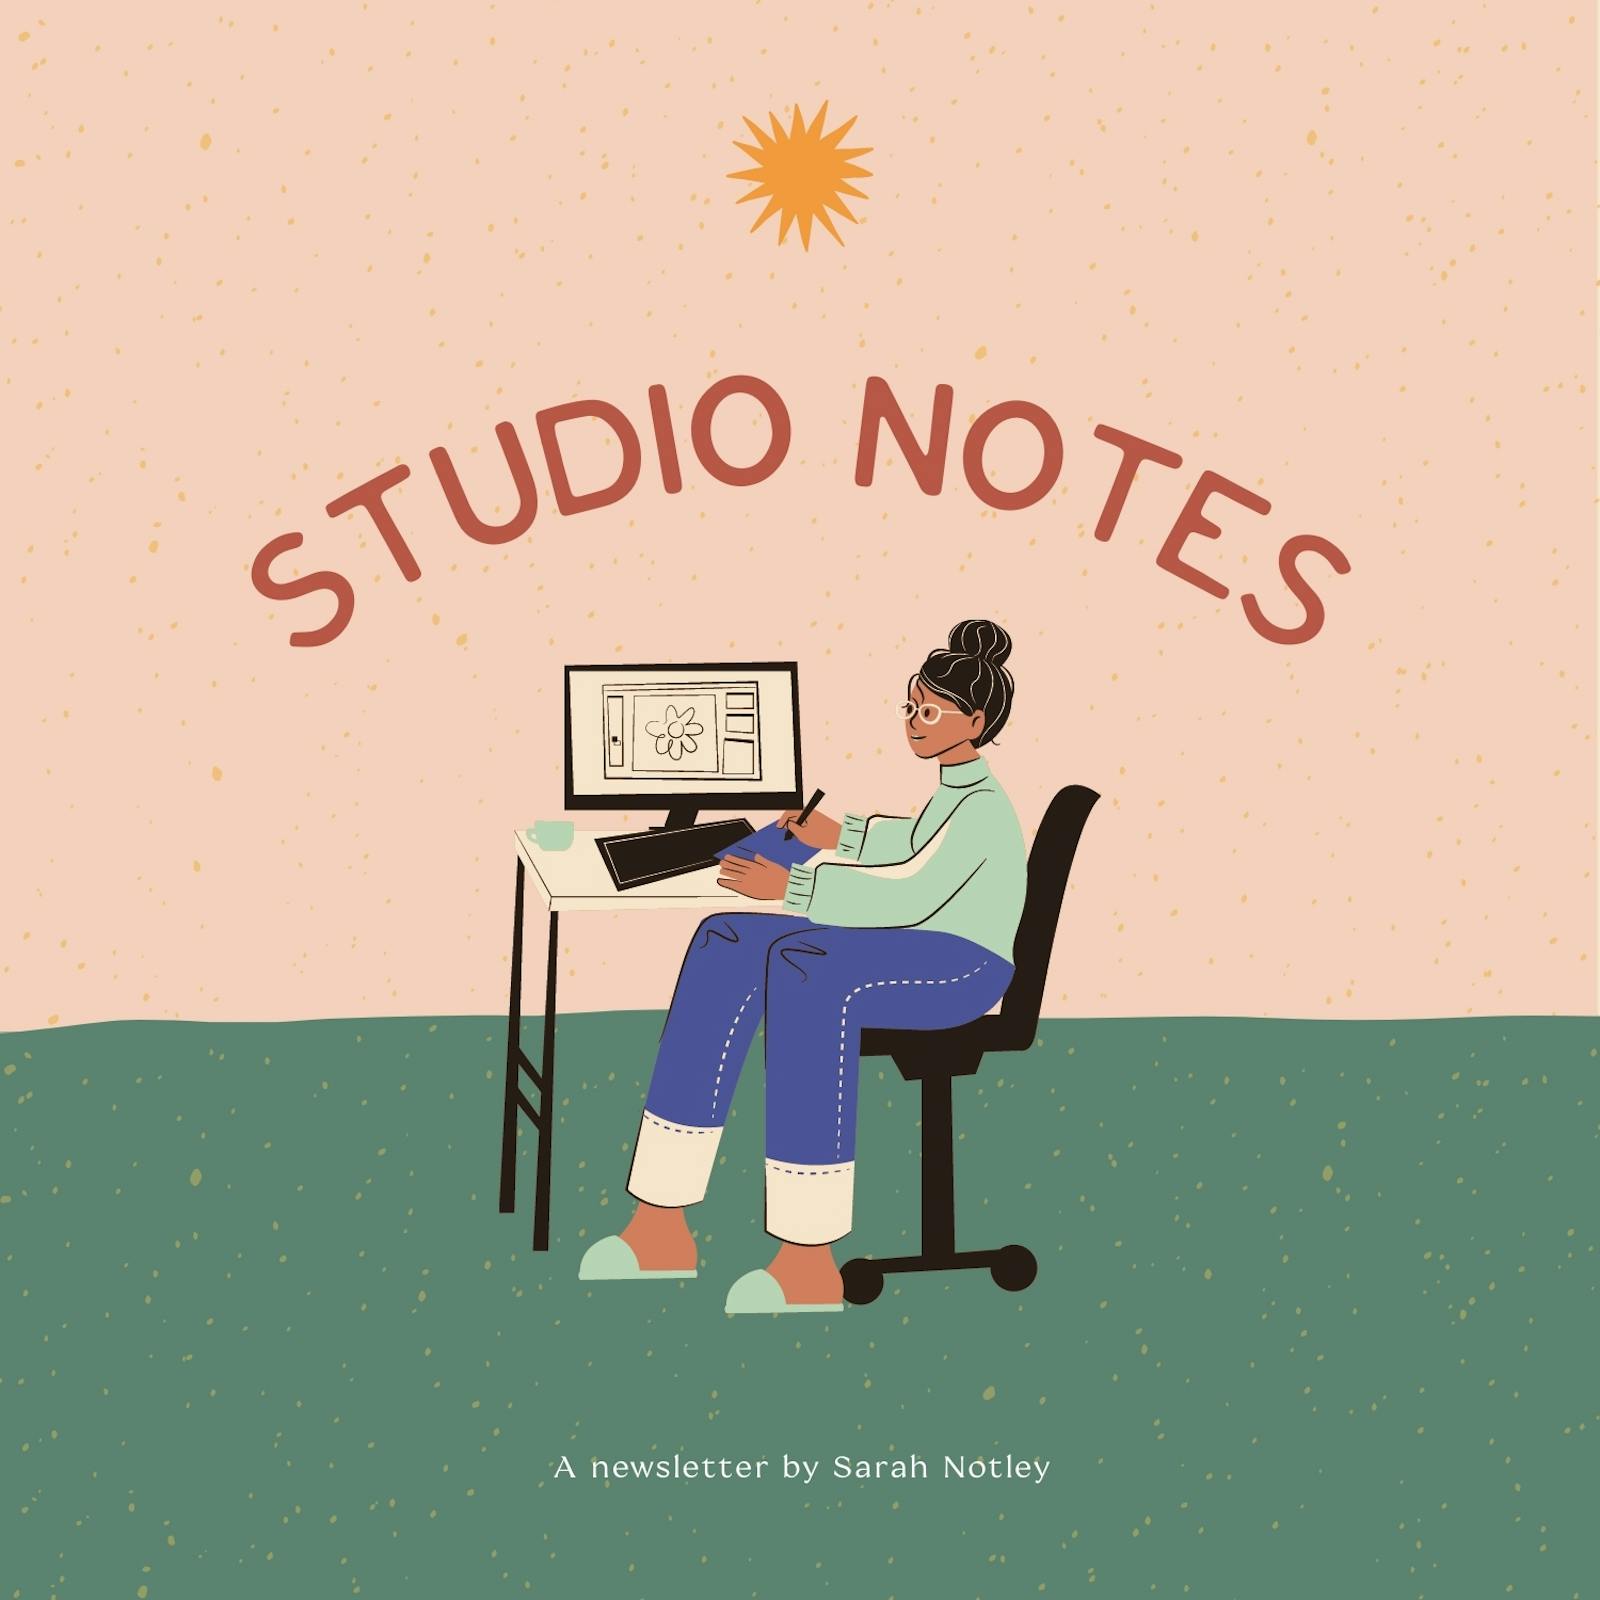 Get Studio Notes